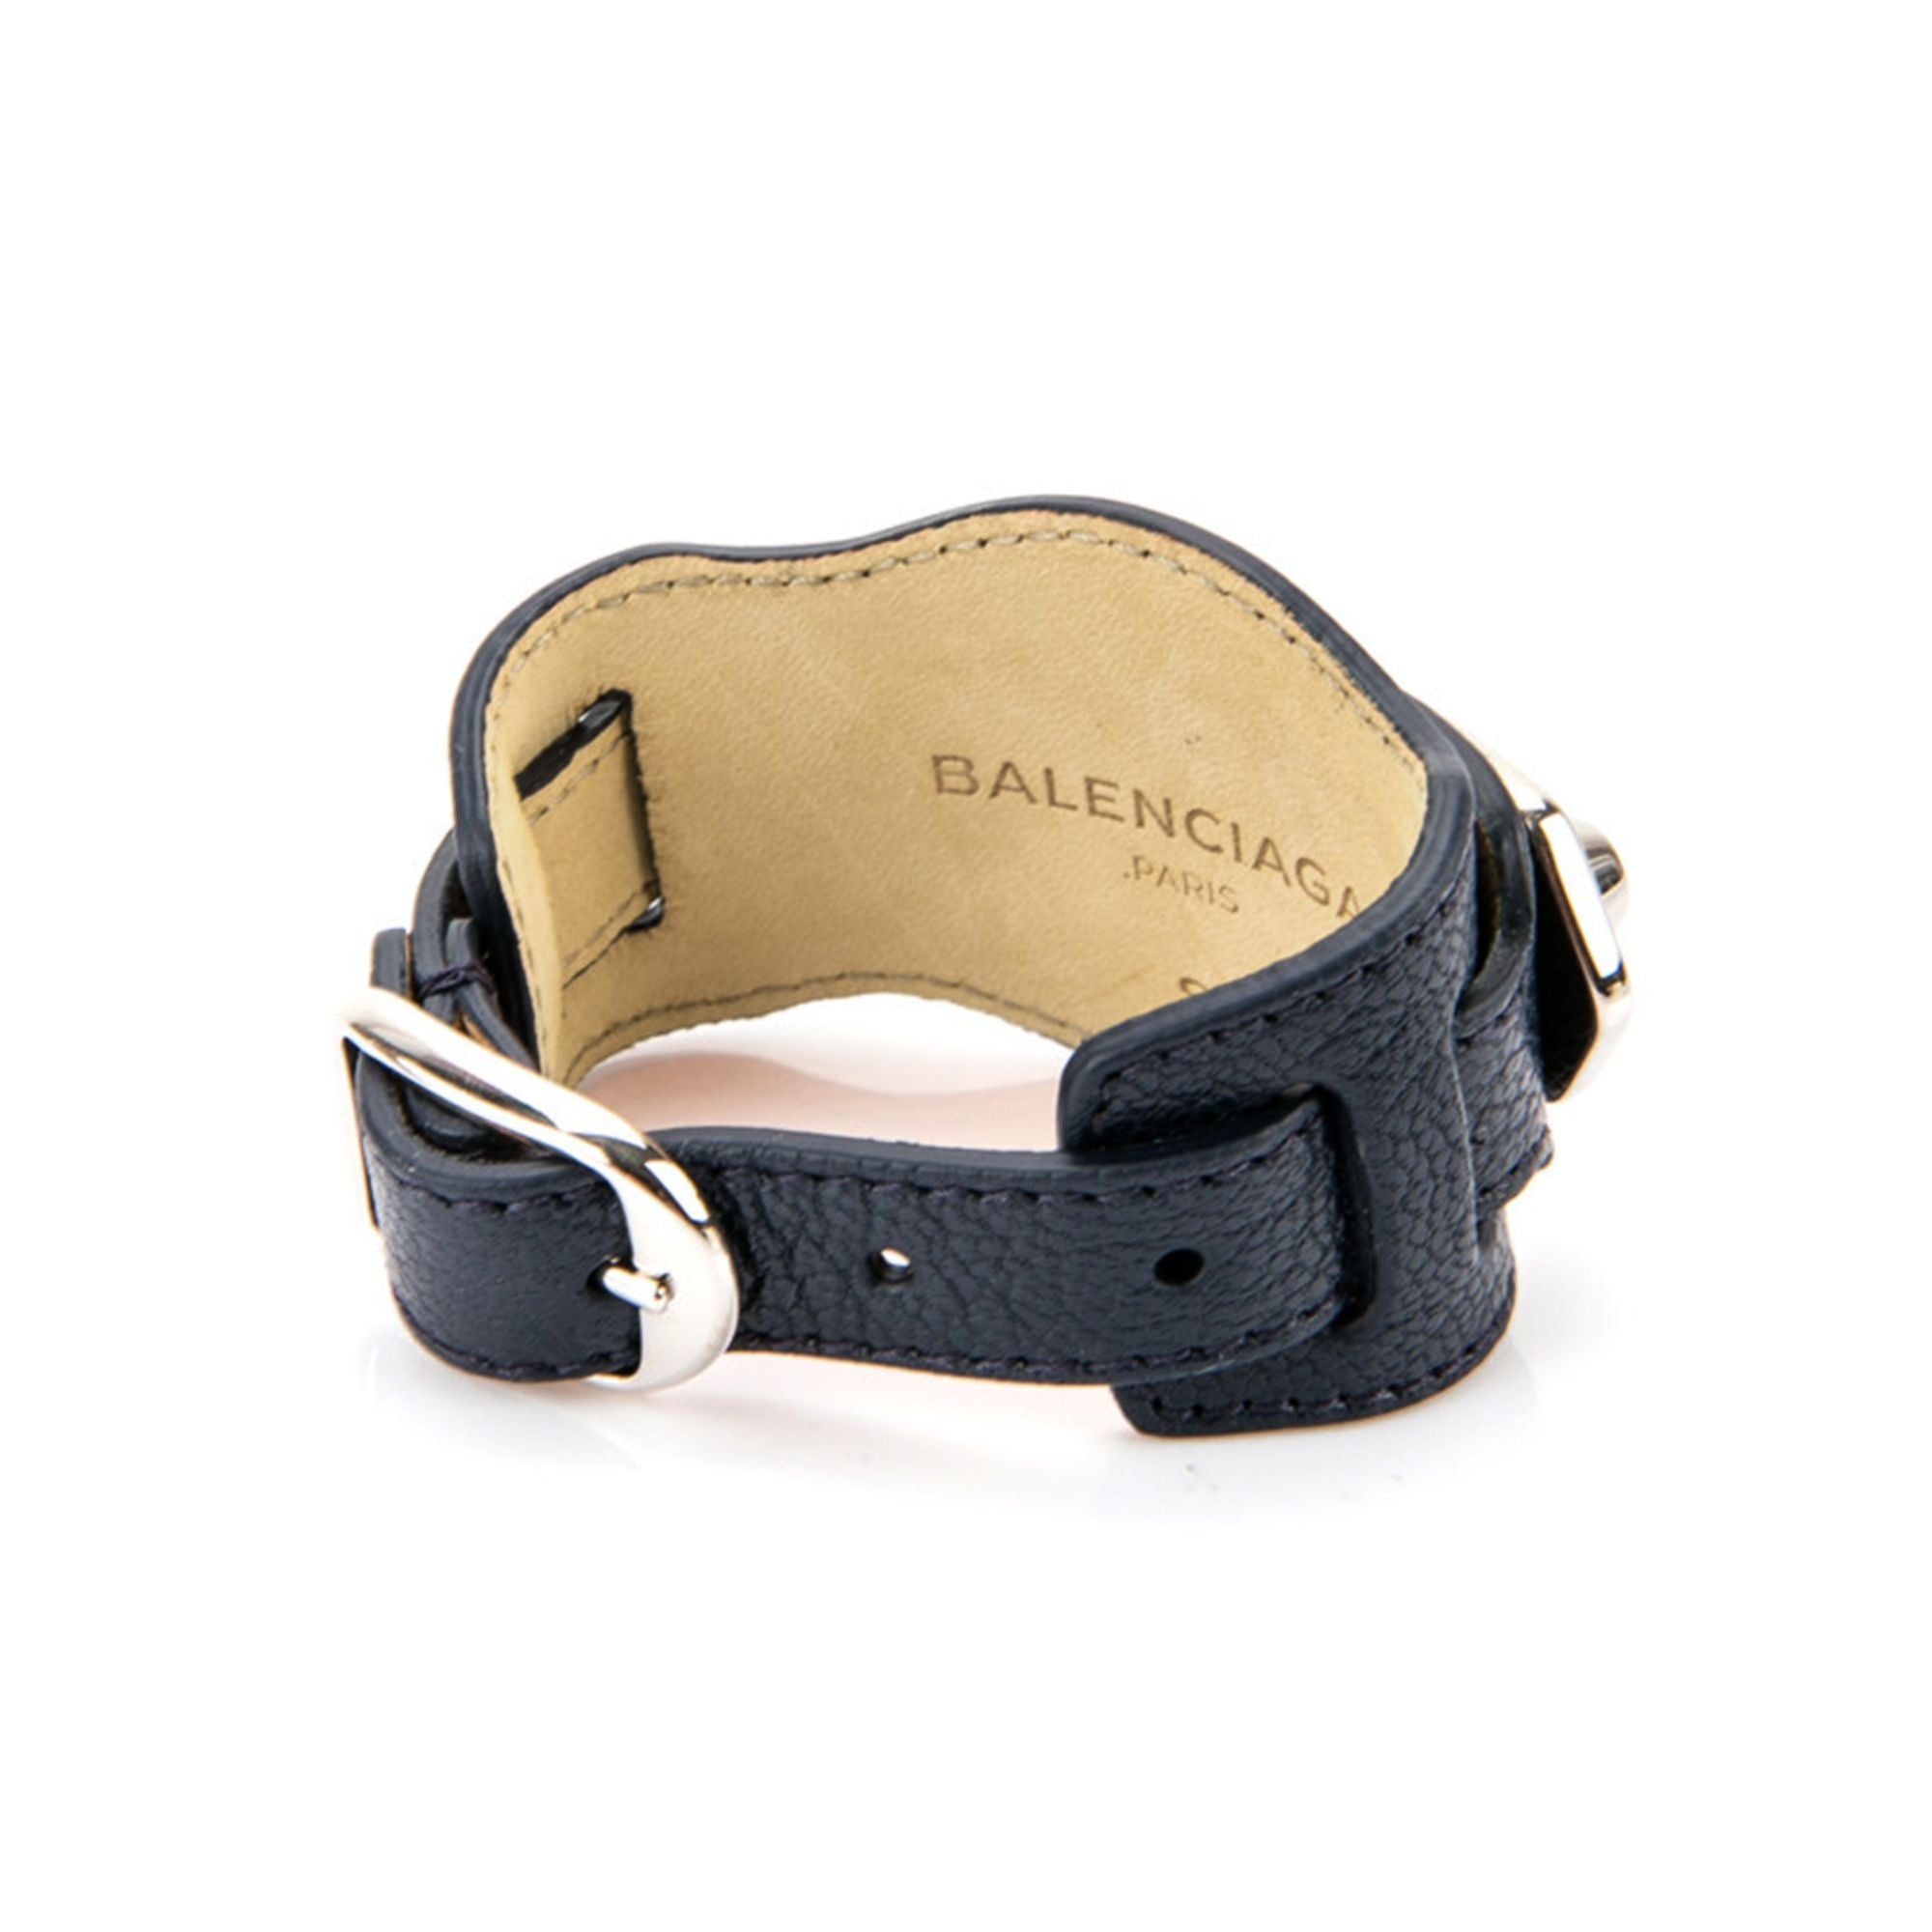 Balenciaga Black Shiny Calfskin Leather Studs Buckle Bracelet